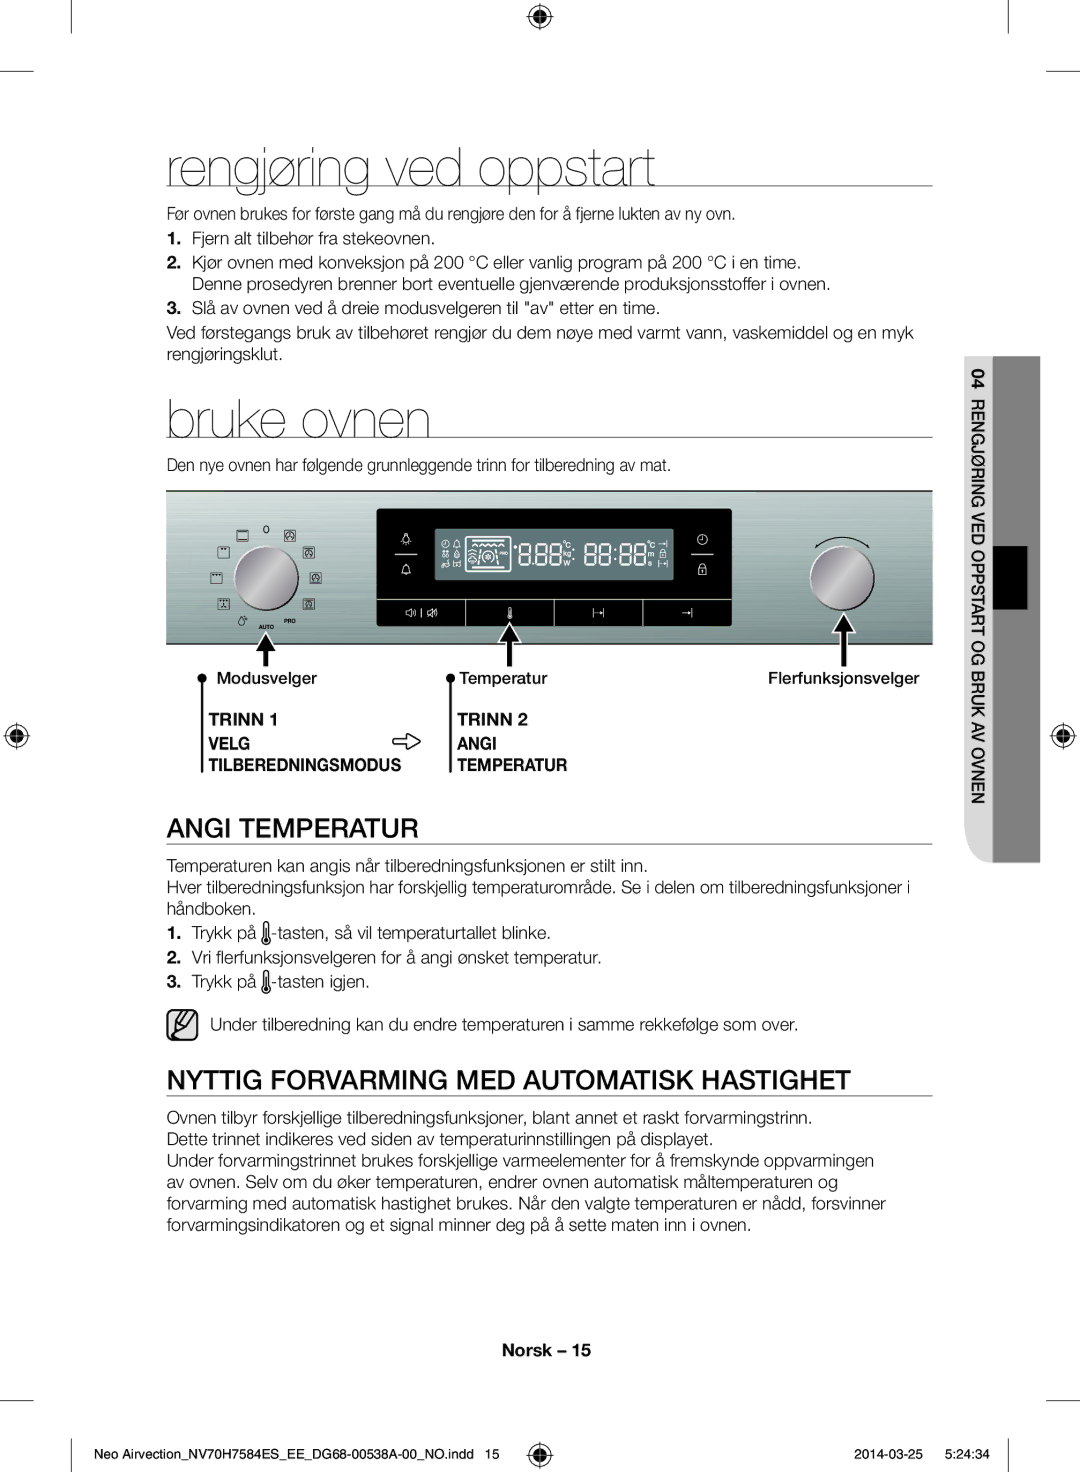 Samsung NV70H7584ES/EE Rengjøring ved oppstart, Bruke ovnen, Angi temperatur, Nyttig forvarming med automatisk hastighet 